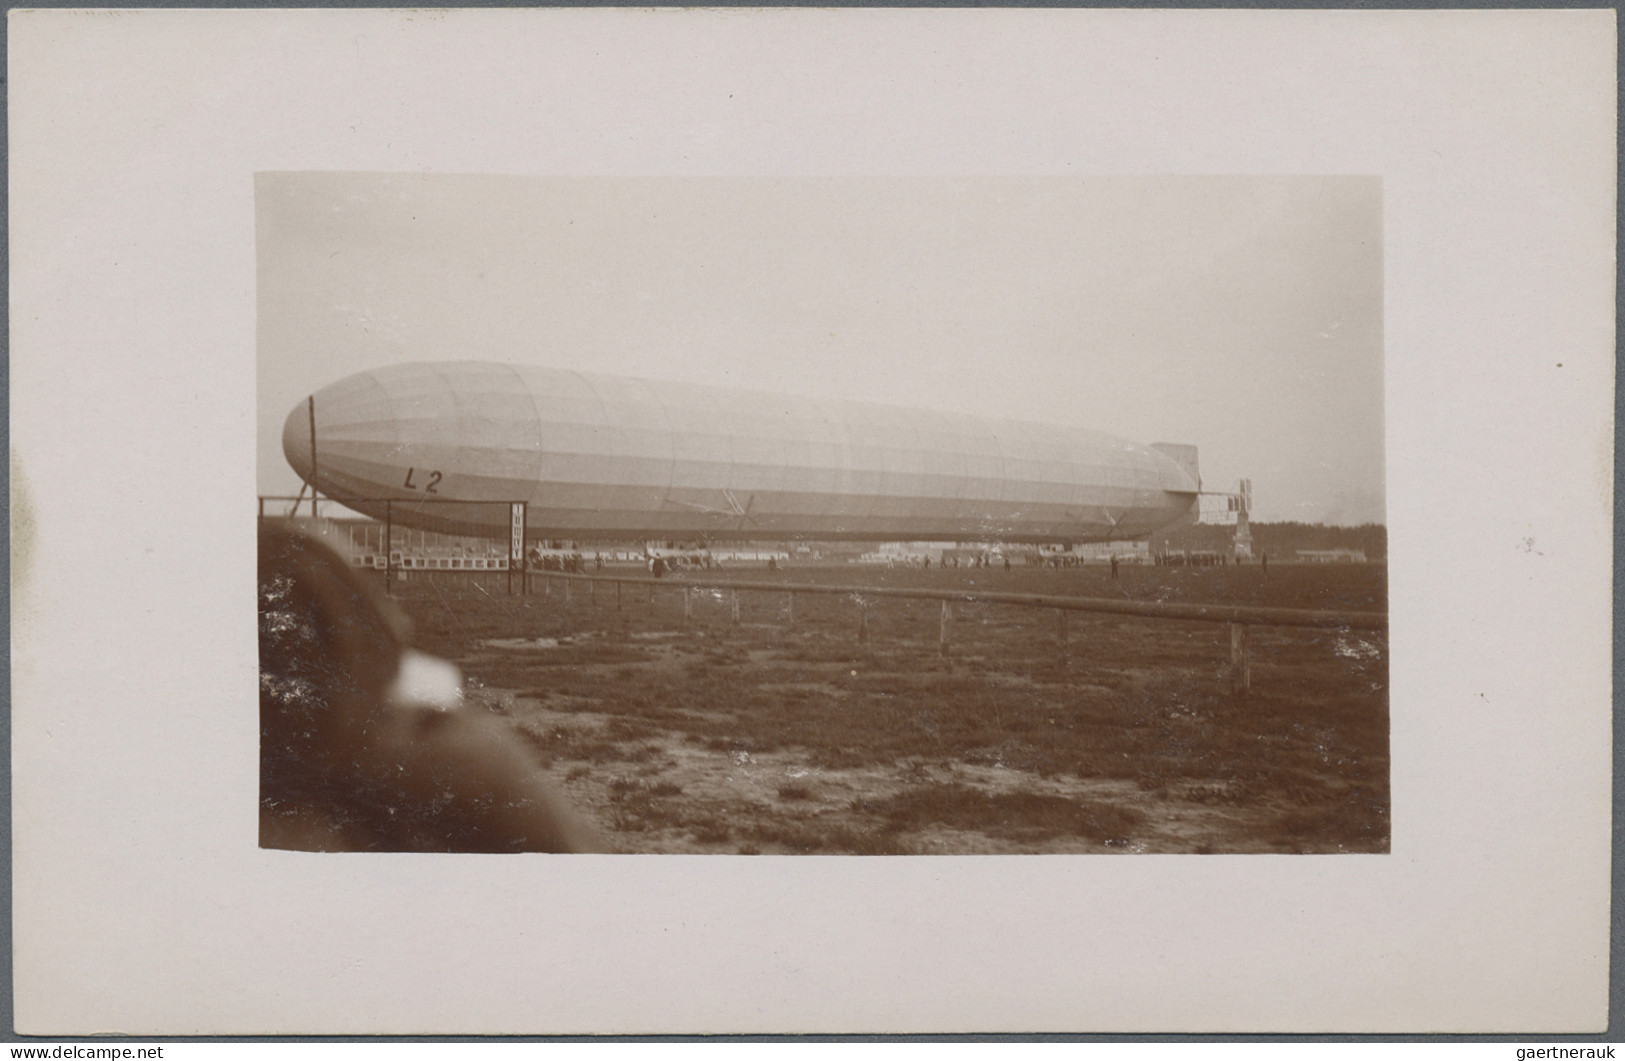 Ansichtskarten: Motive: ZEPPELIN: Over two hundred Zeppelin flights, original pr